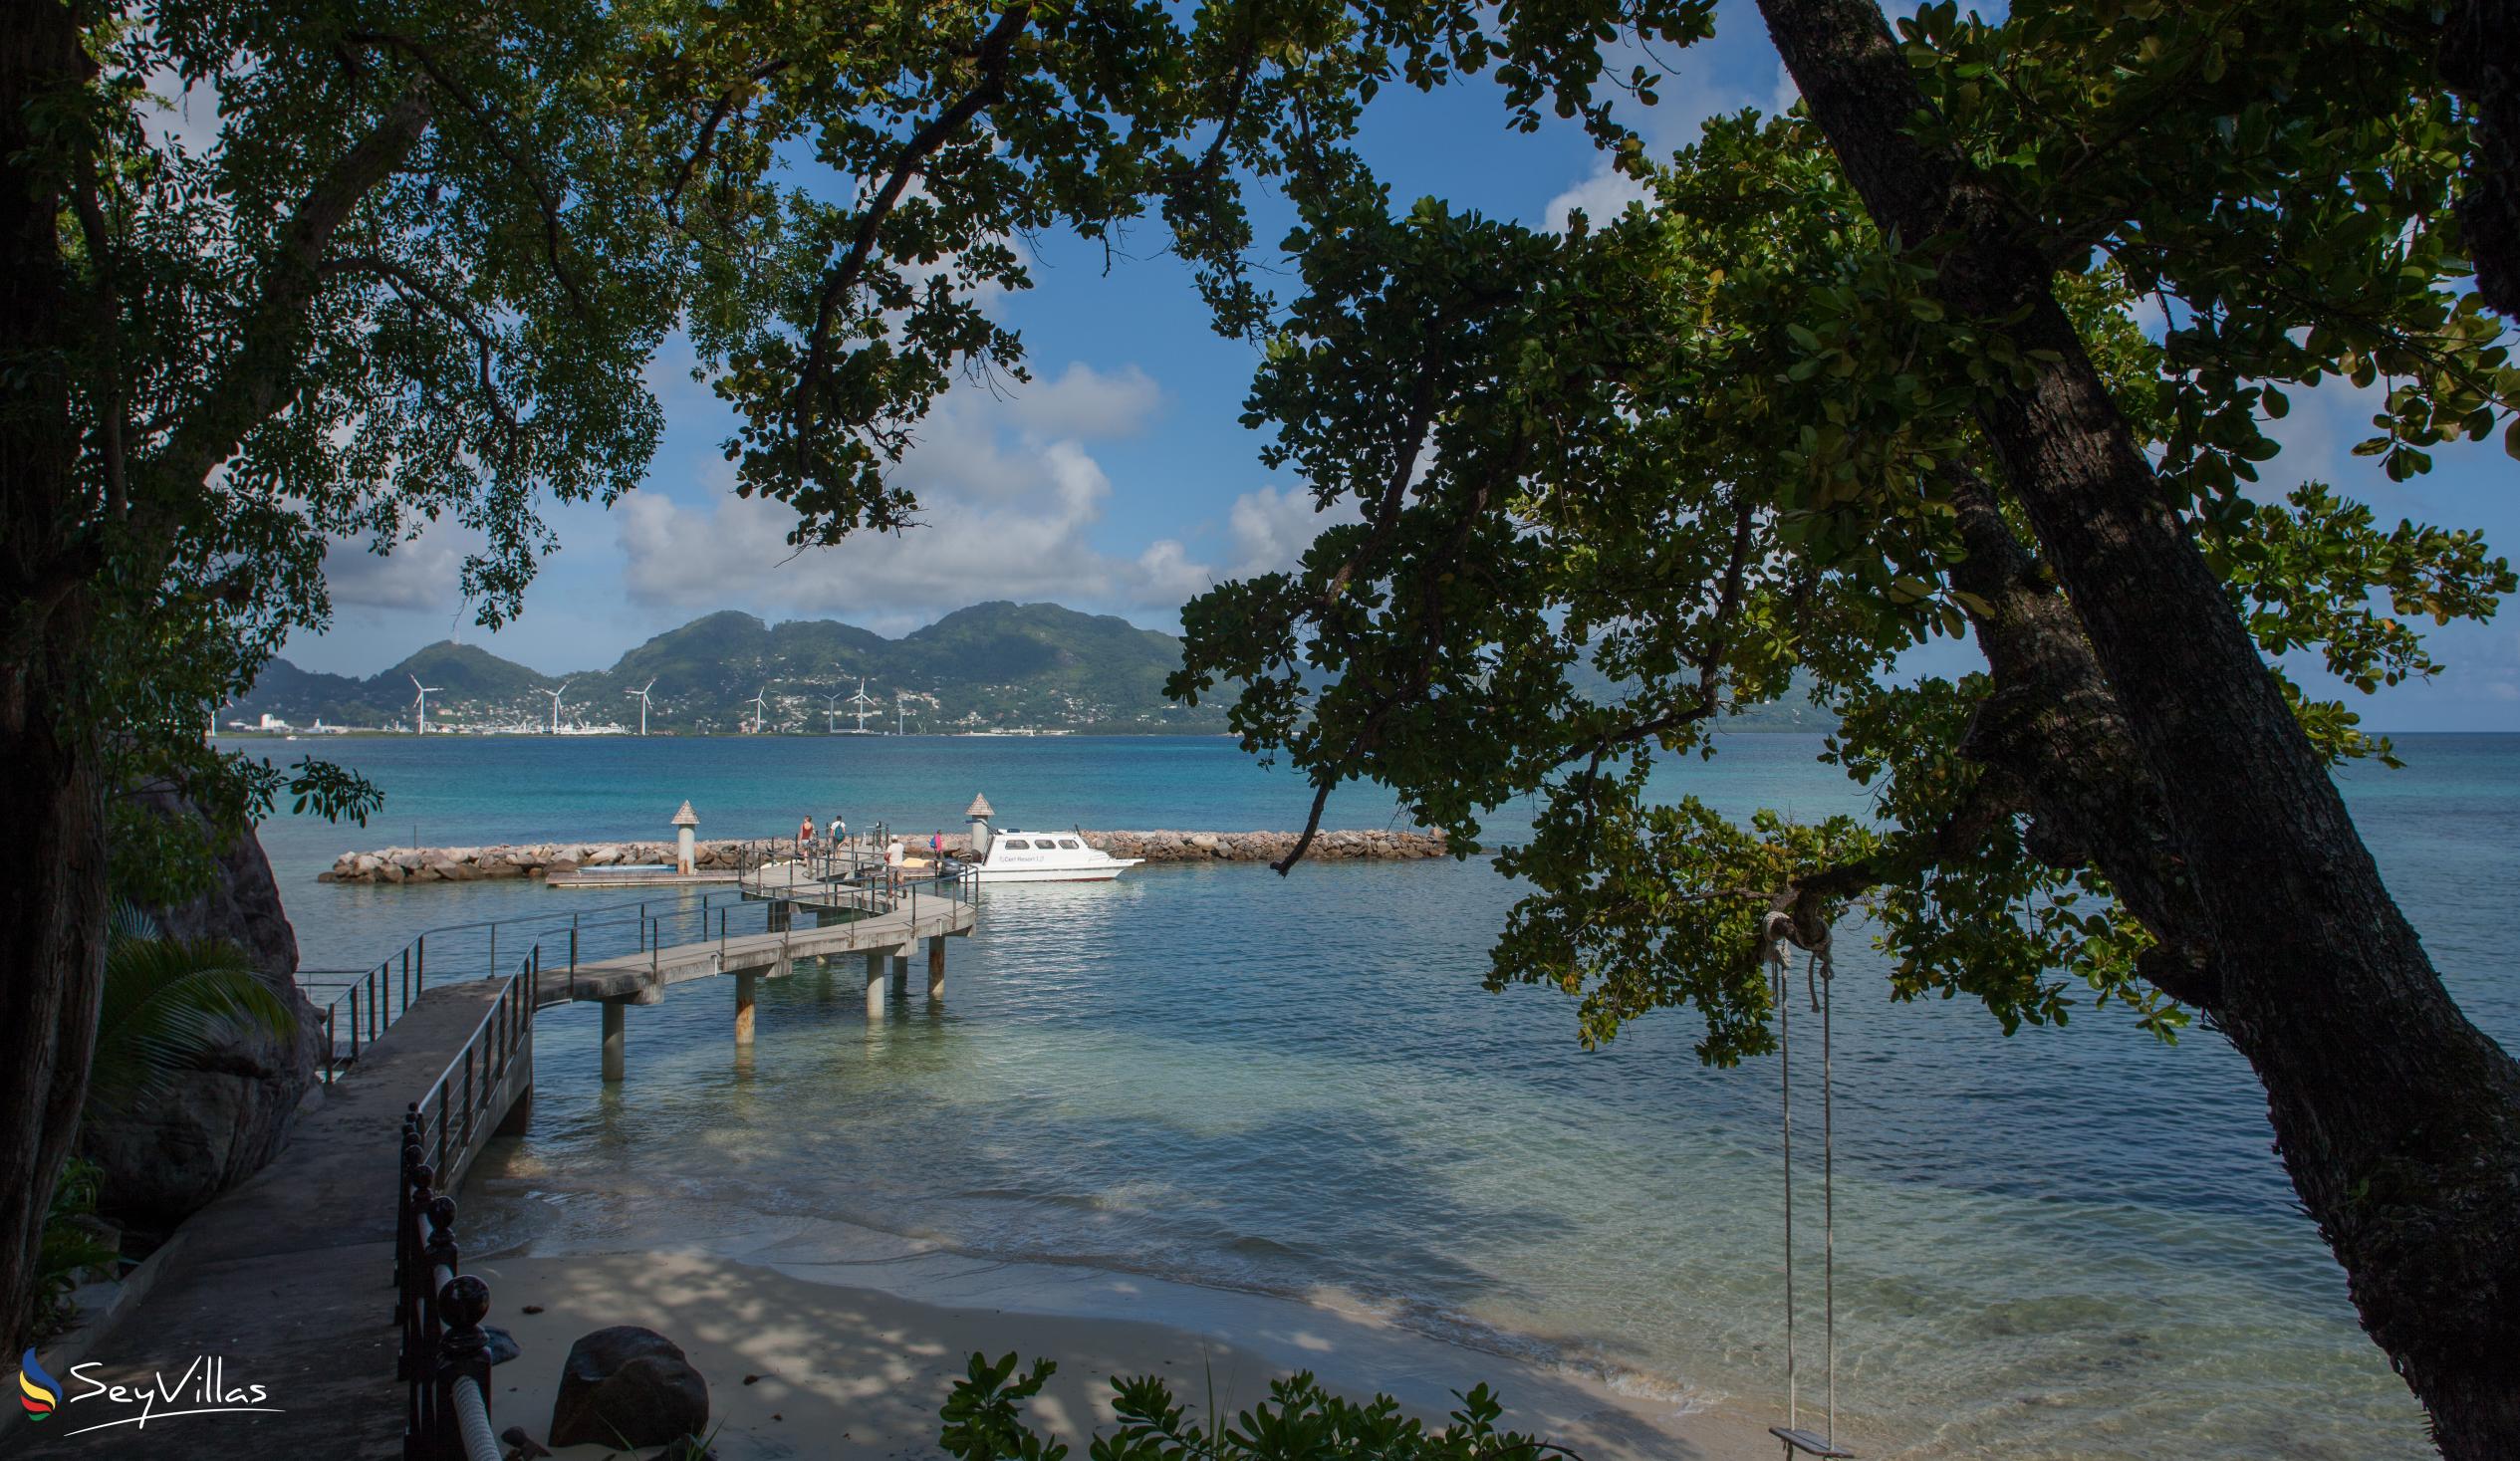 Foto 5: Cerf Island Resort - Posizione - Cerf Island (Seychelles)